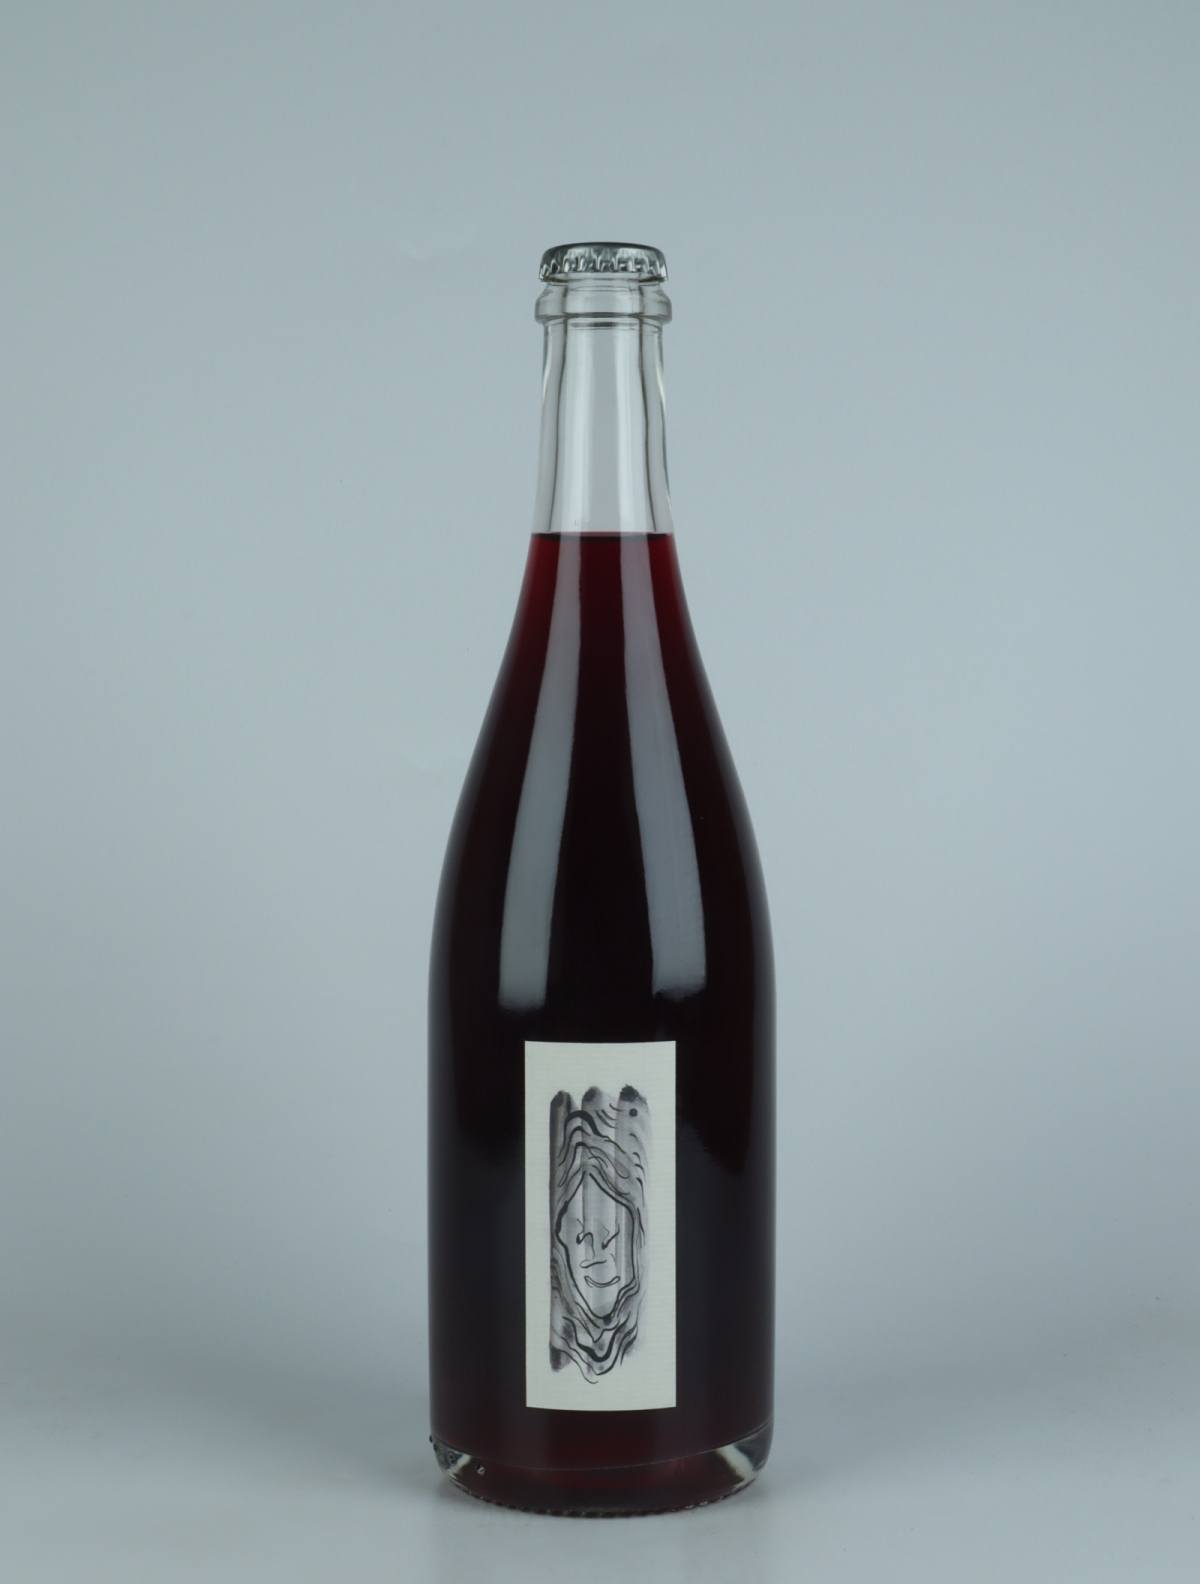 A bottle 2022 Penumbra Red wine from Absurde Génie des Fleurs, Languedoc in France